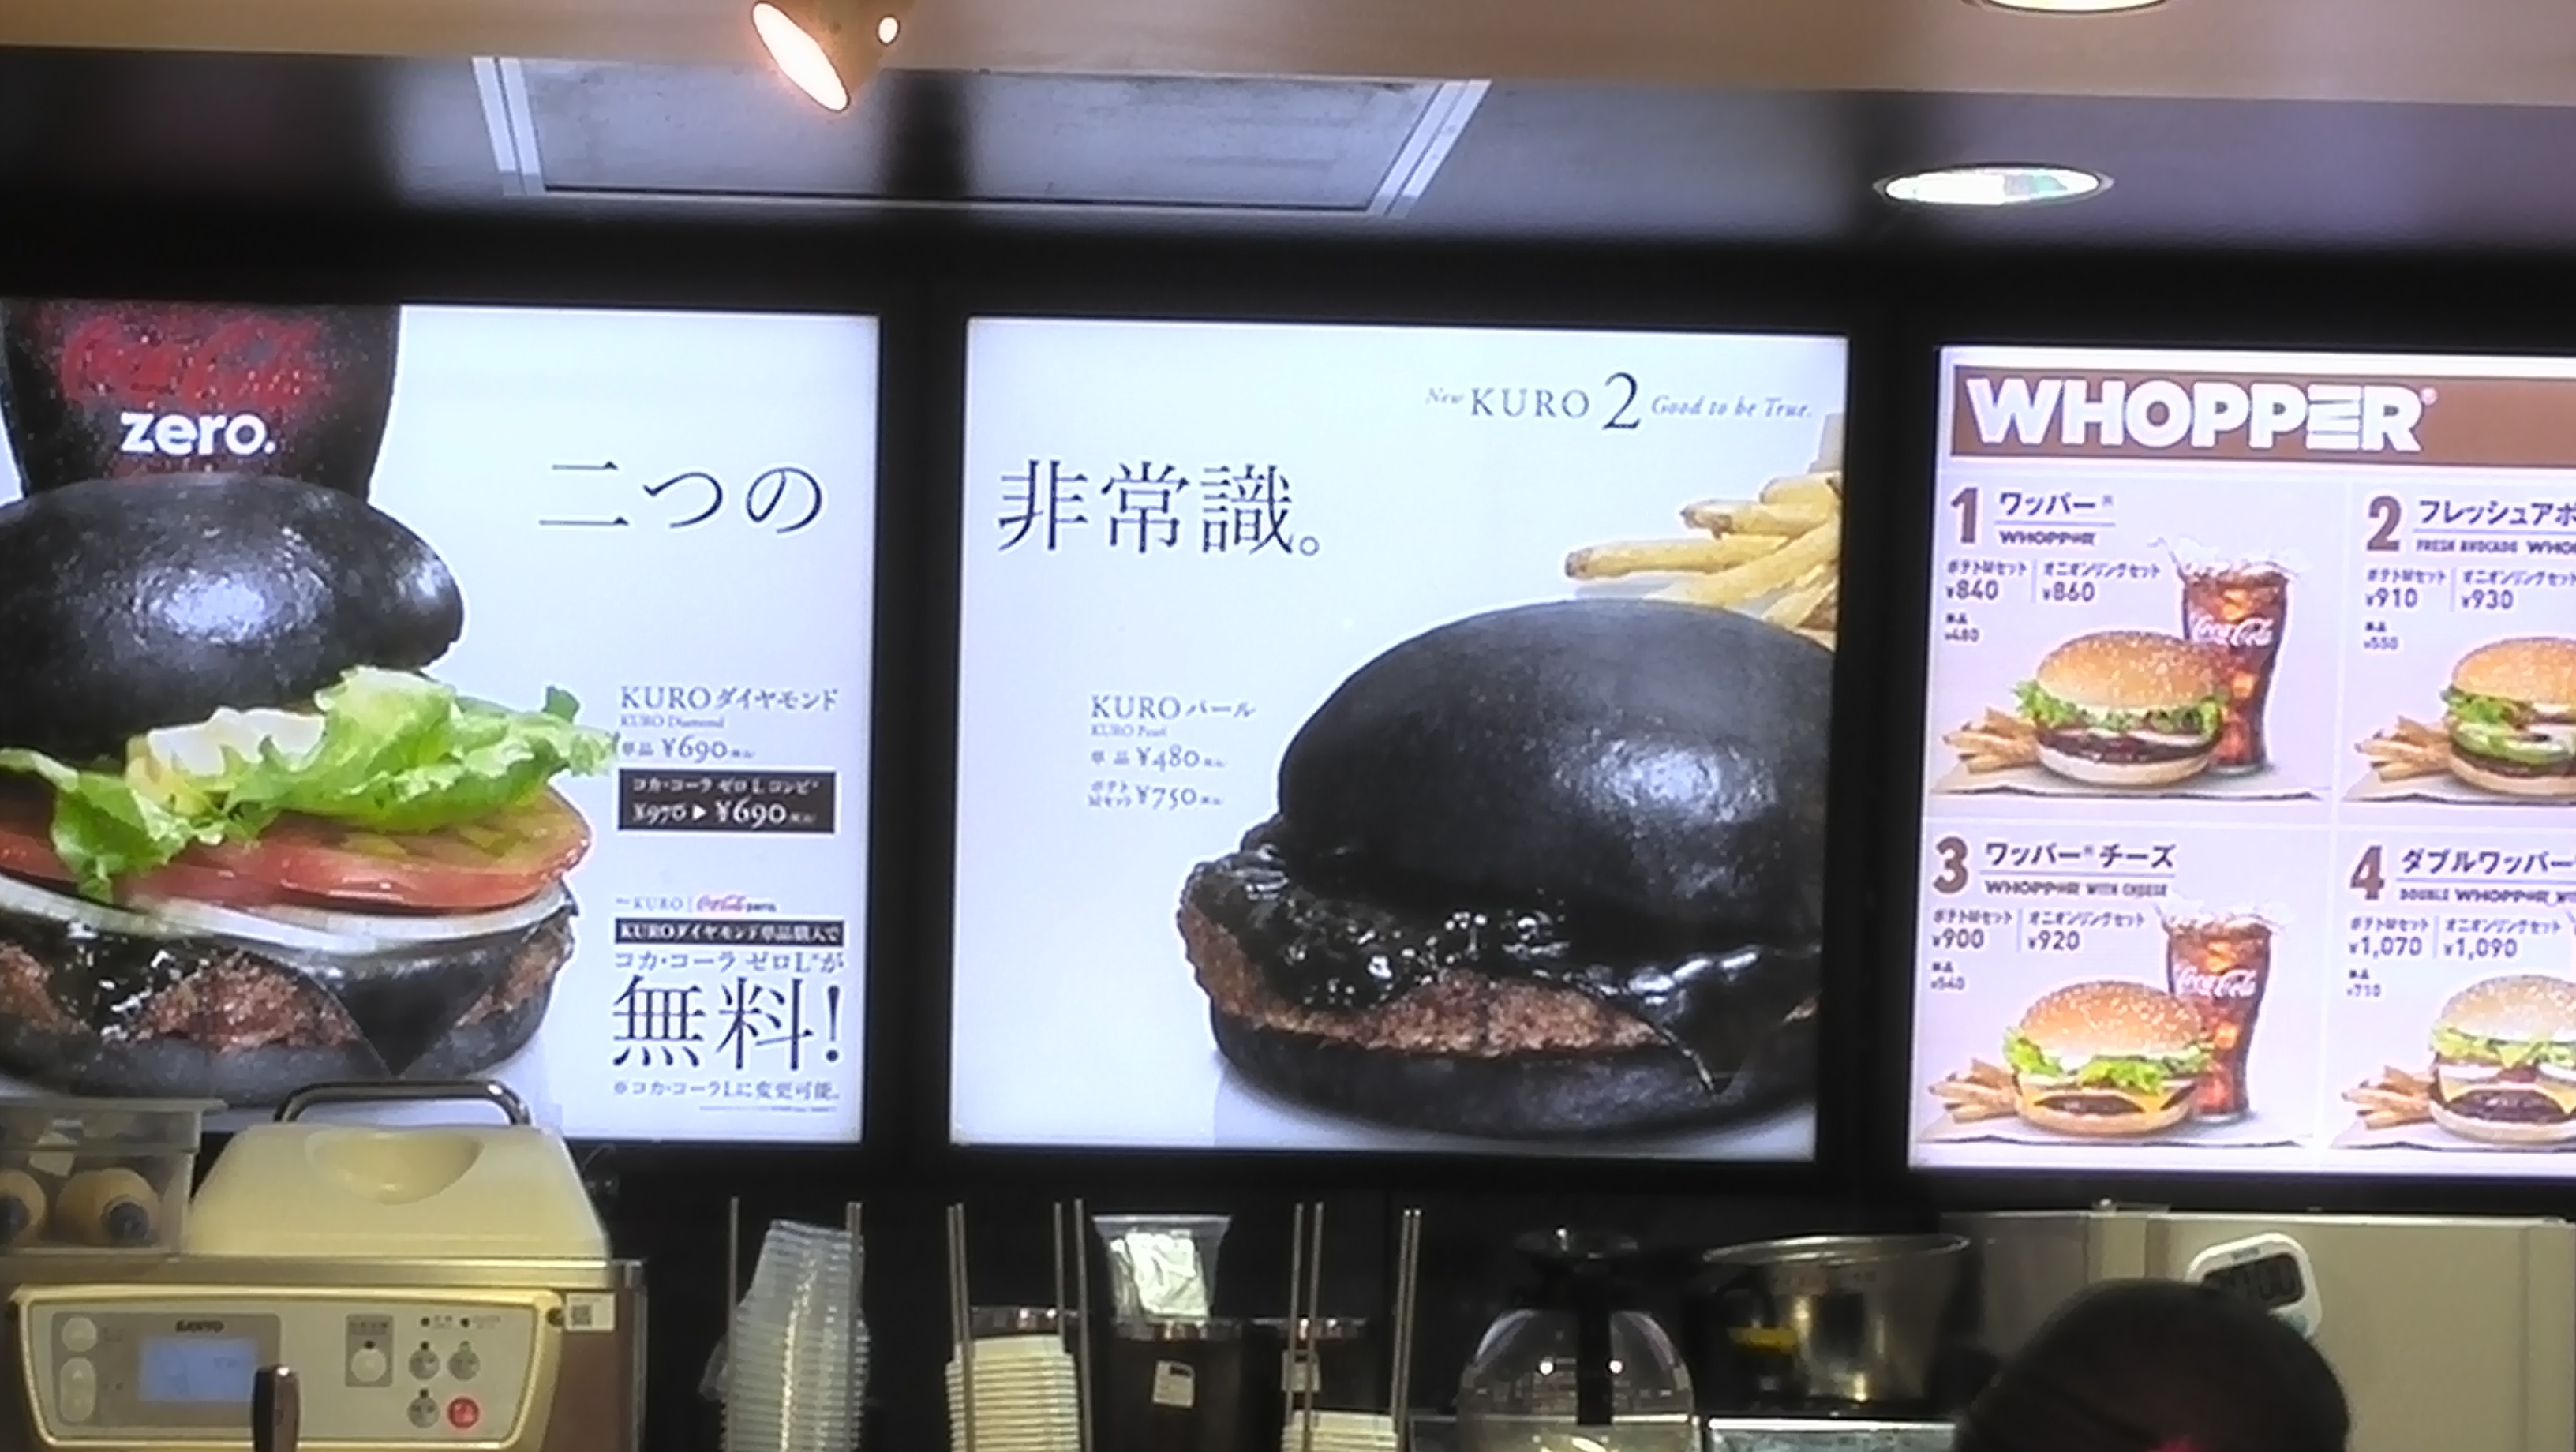 Burger King ad for Kuro burgers sold in Japan since 2012. Further information in German: http://www.welt.de/vermischtes/article132431267/So-schmecken-die-schwarzen-Burger-aus-Japan.html